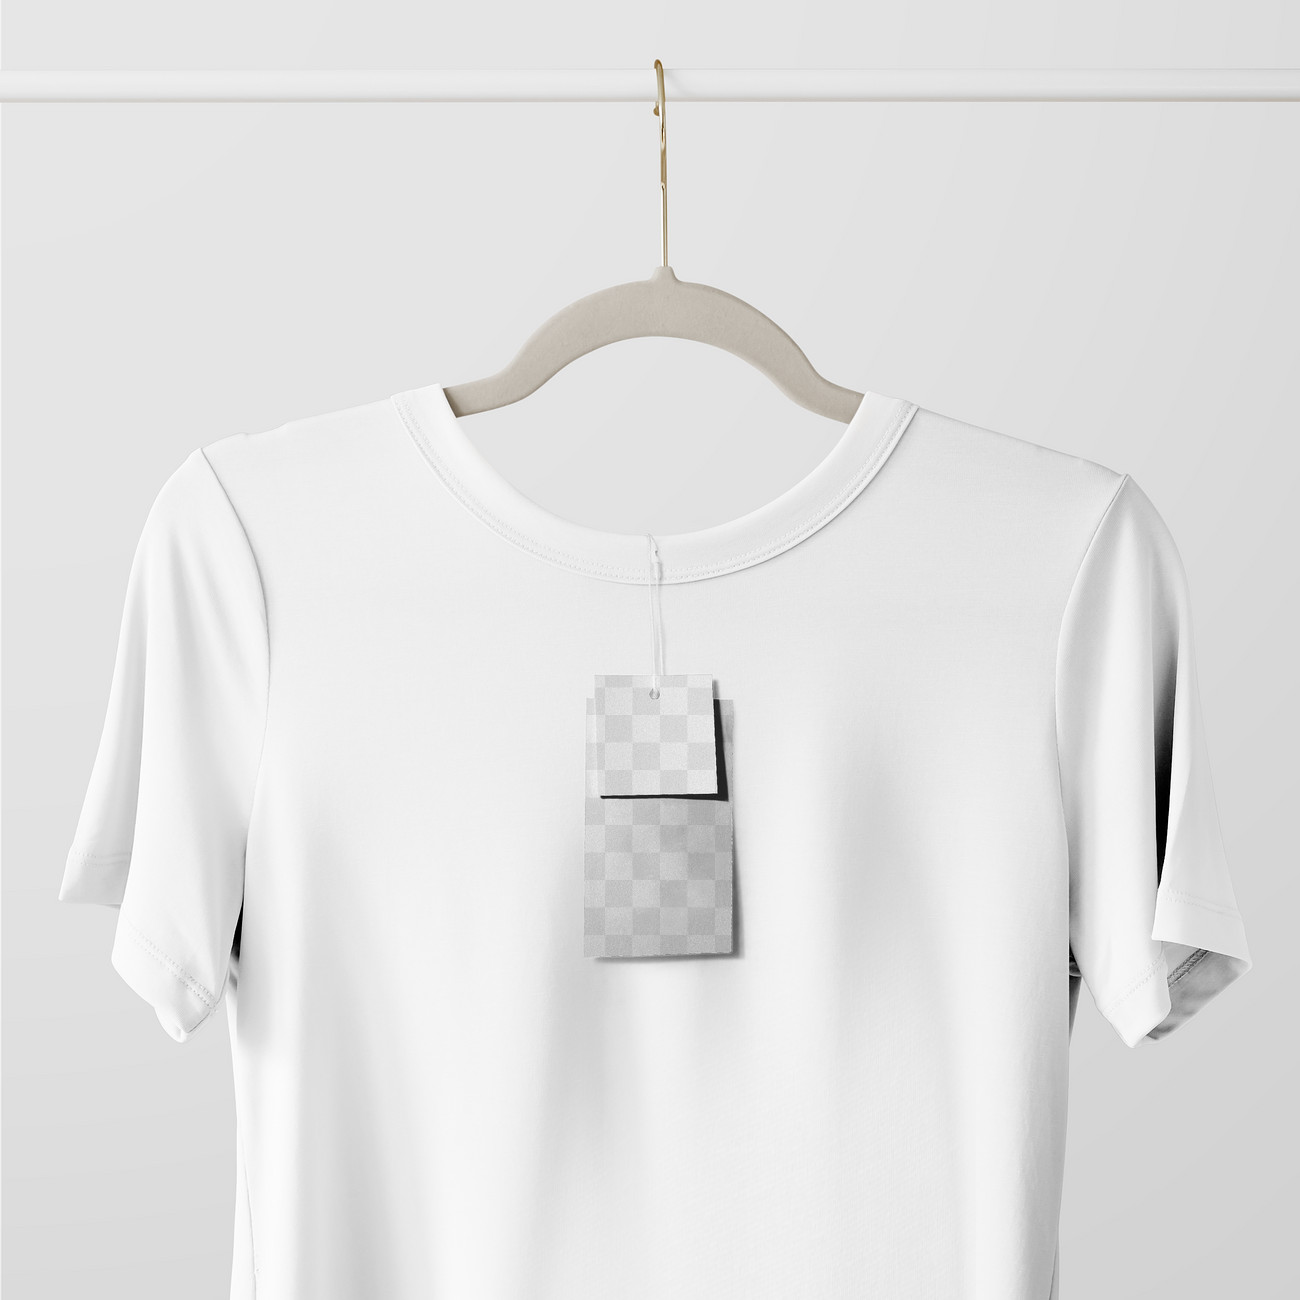 Hanger T Shirt Image Wallpaper